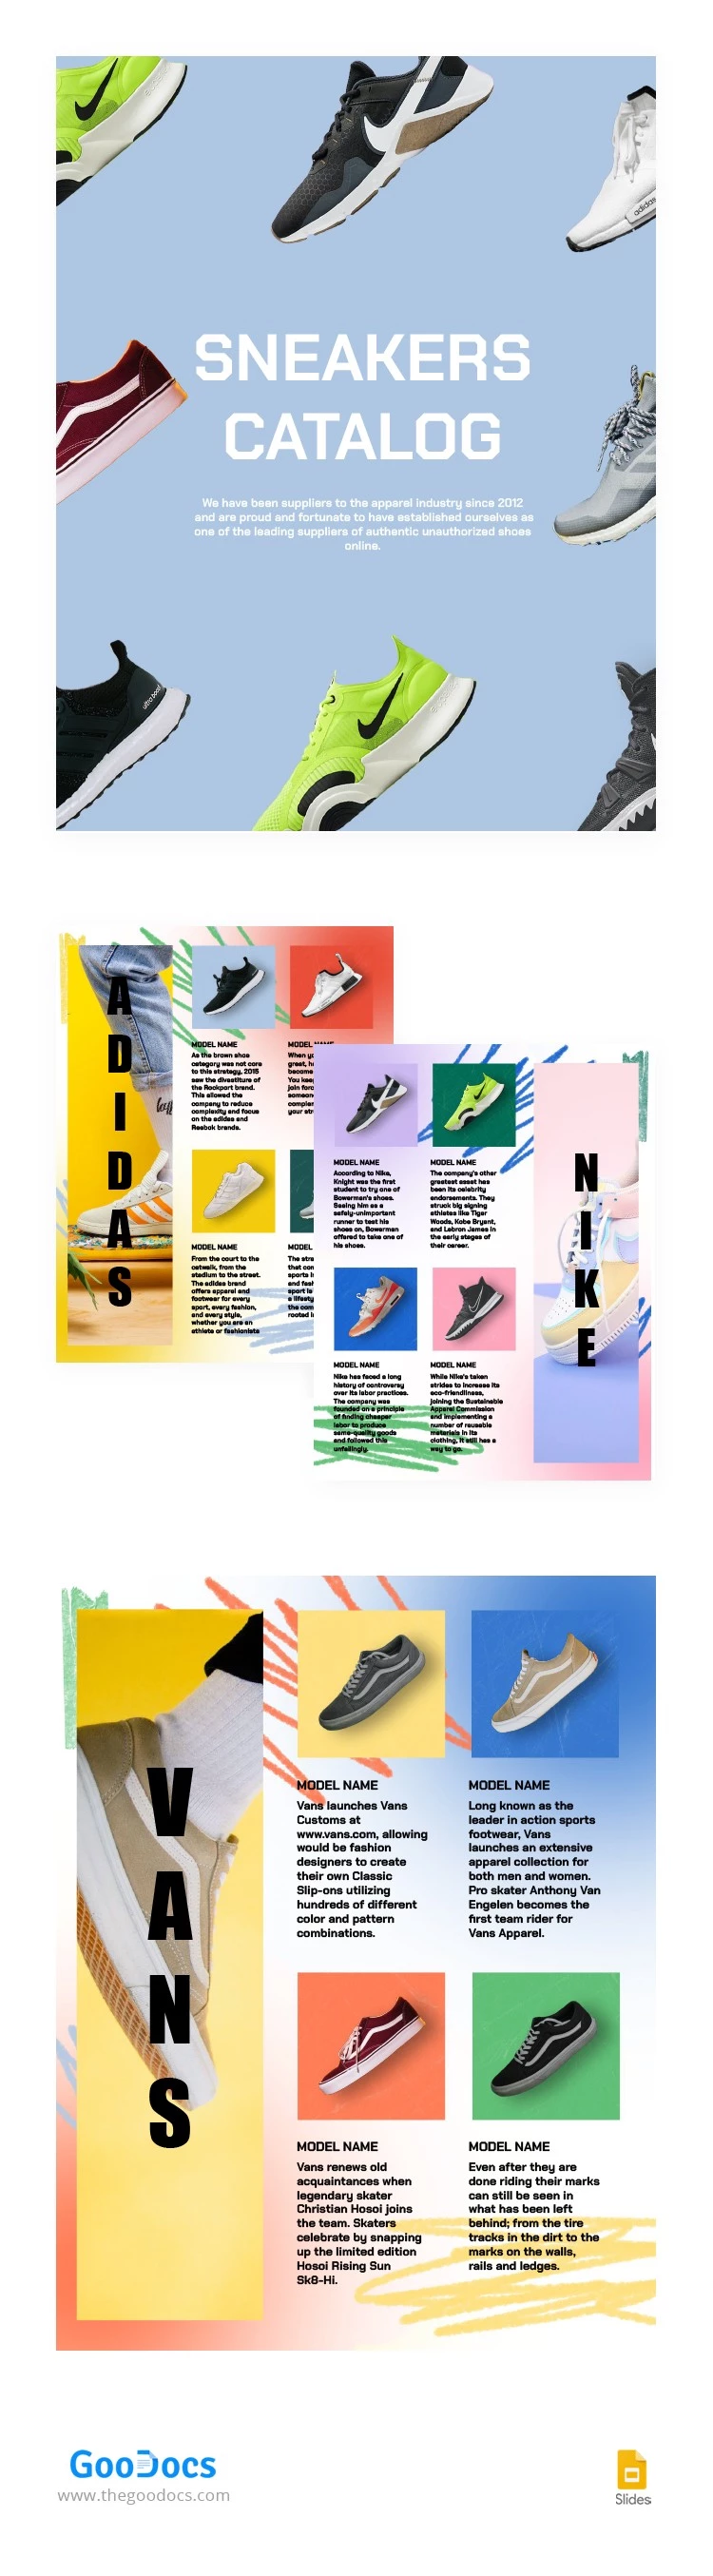 Catálogo de zapatillas elegantes - free Google Docs Template - 10063267